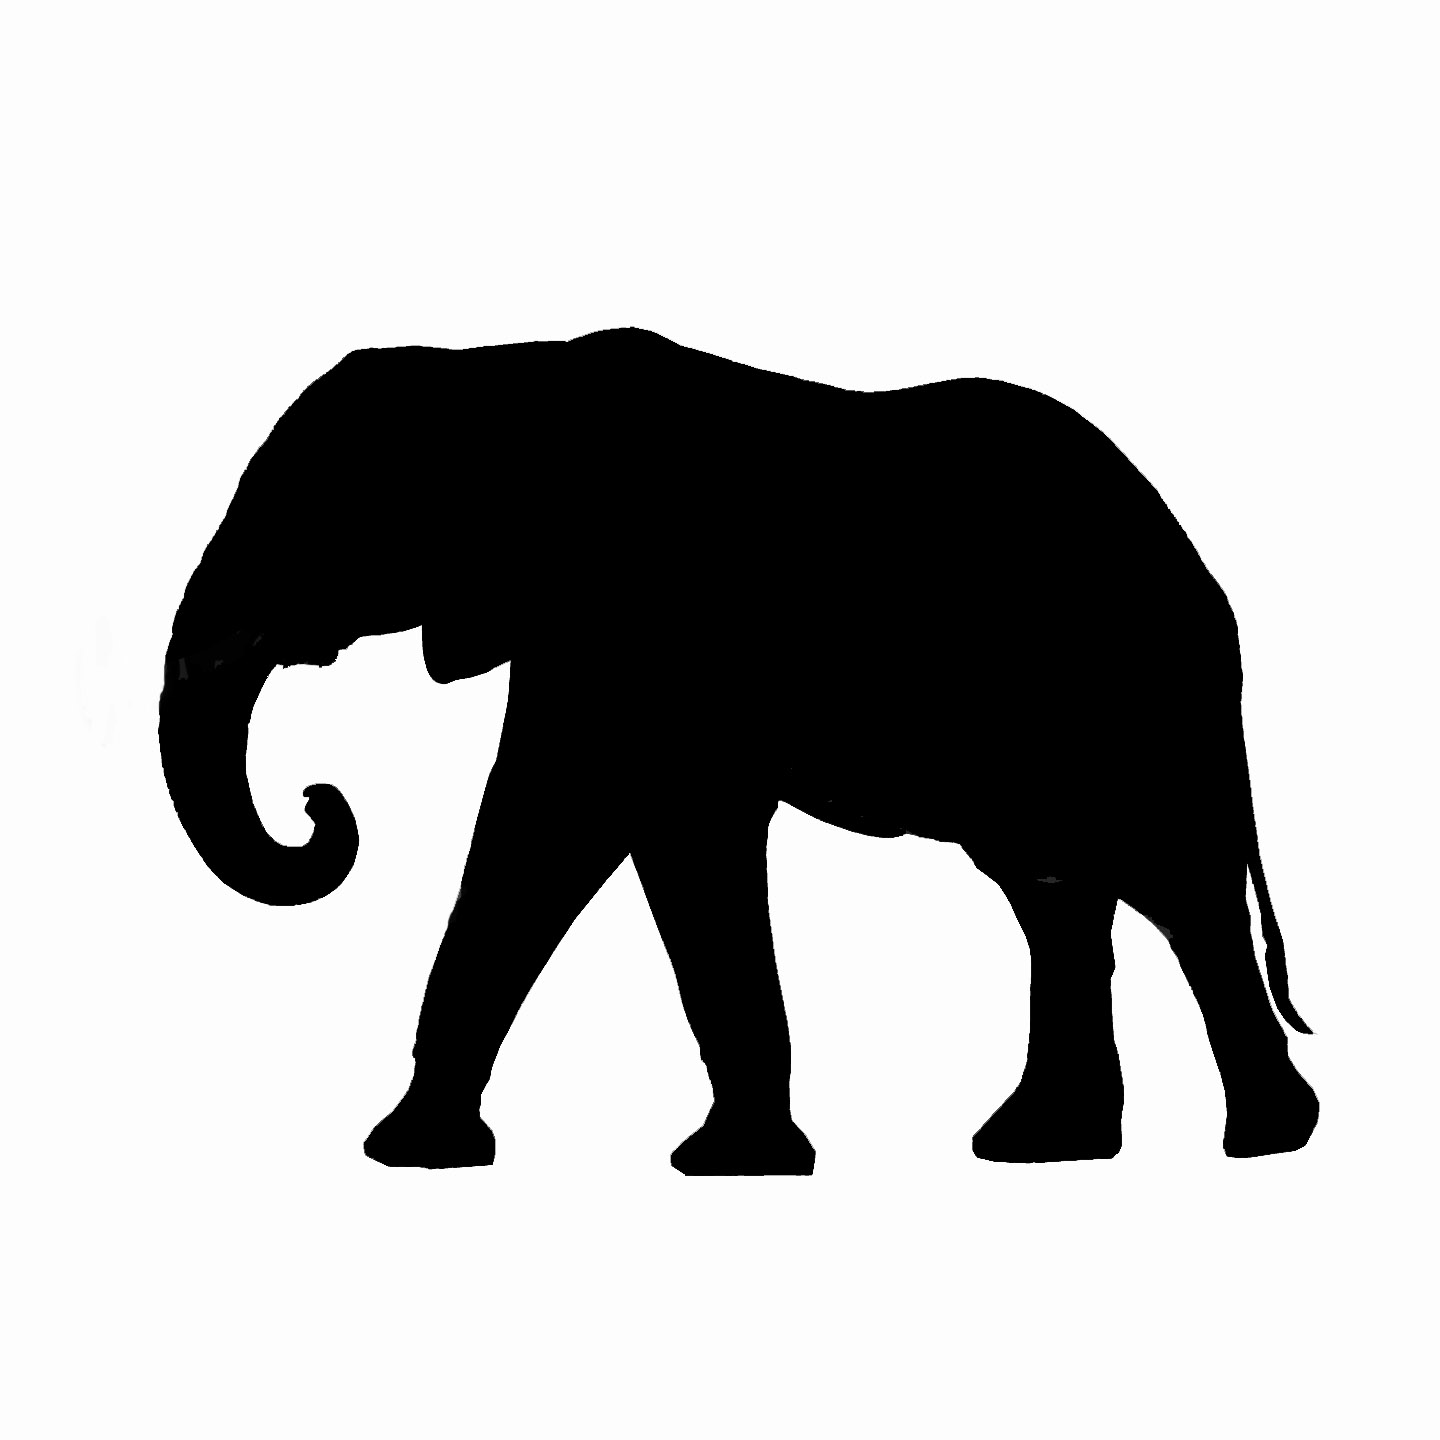 Elephant Hearts clip art - Clipart library - Clipart library